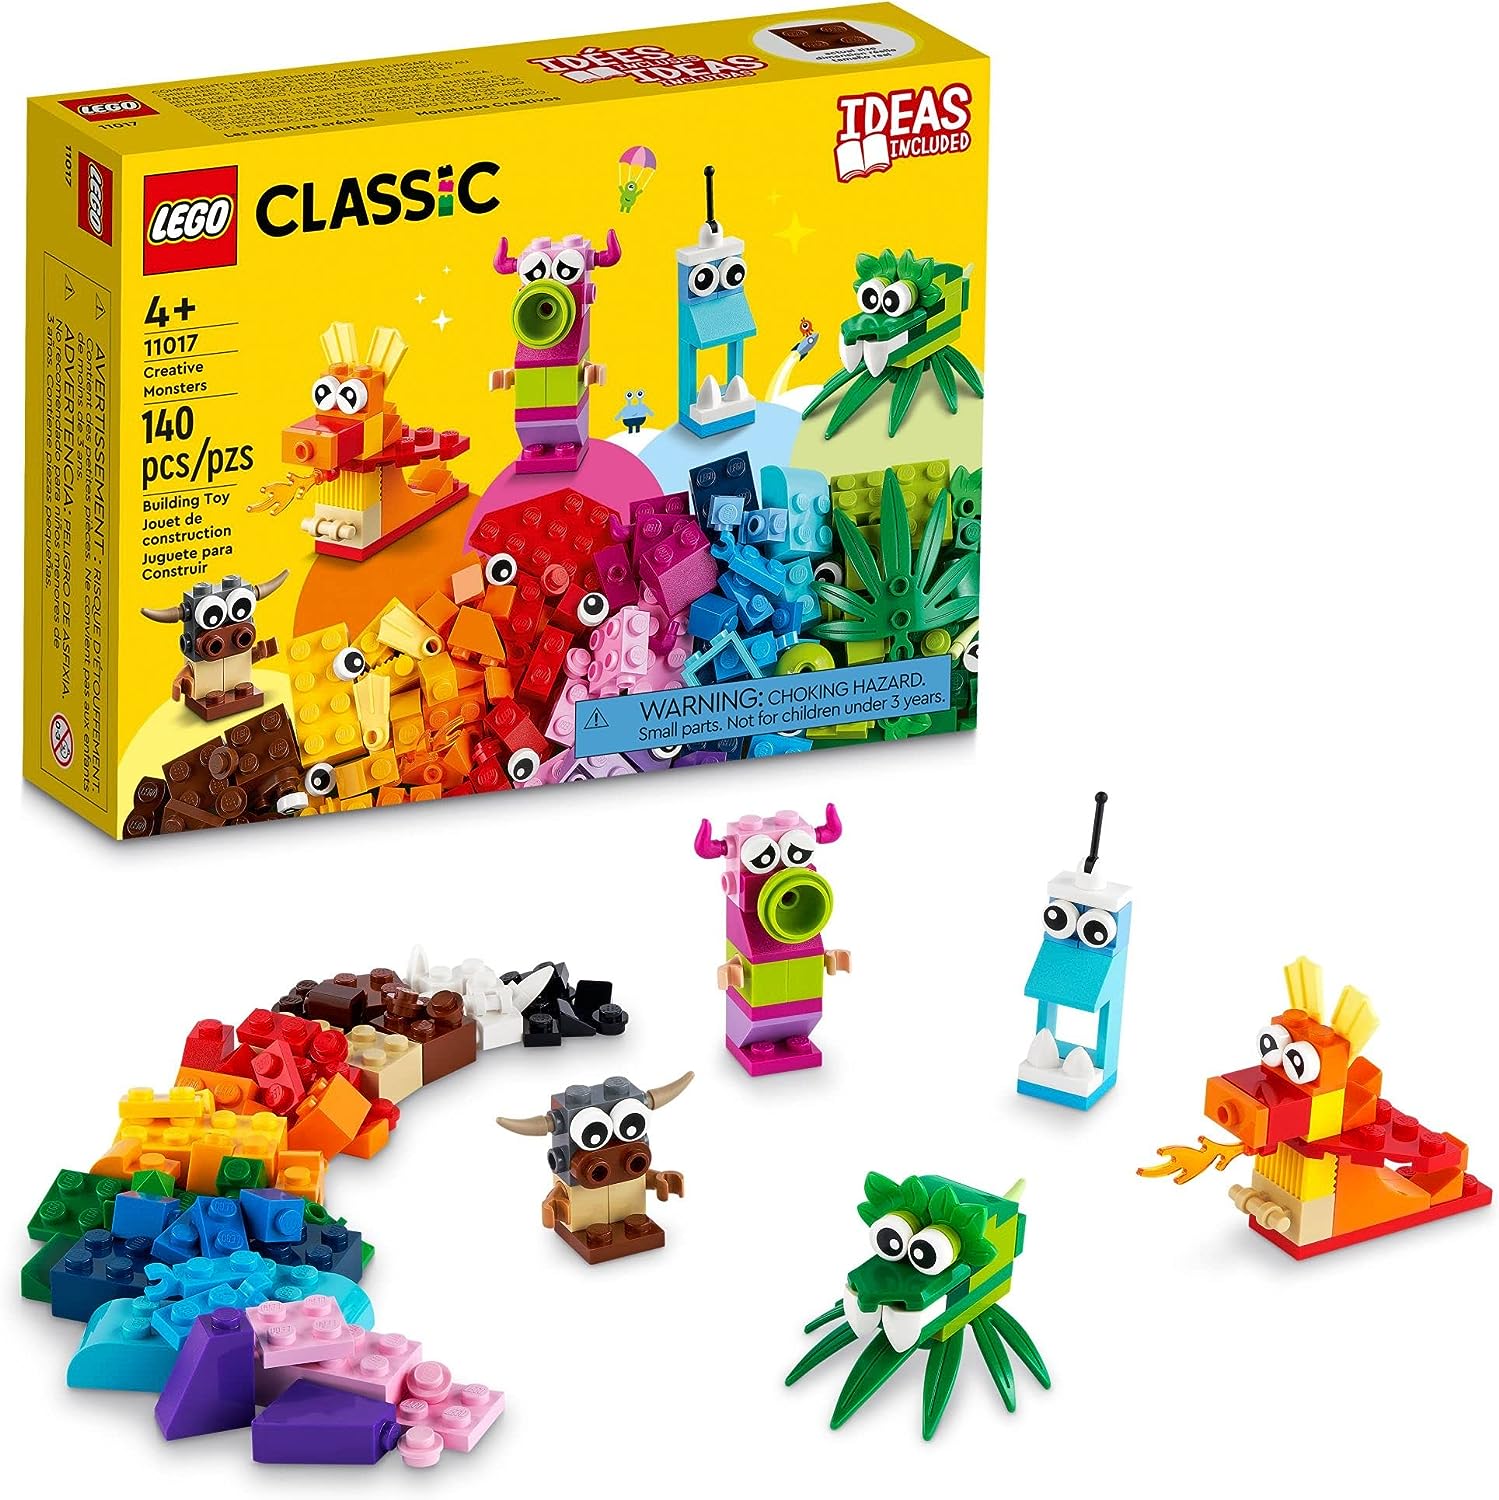 LEGO Classic Creative Monsters Set (11017)